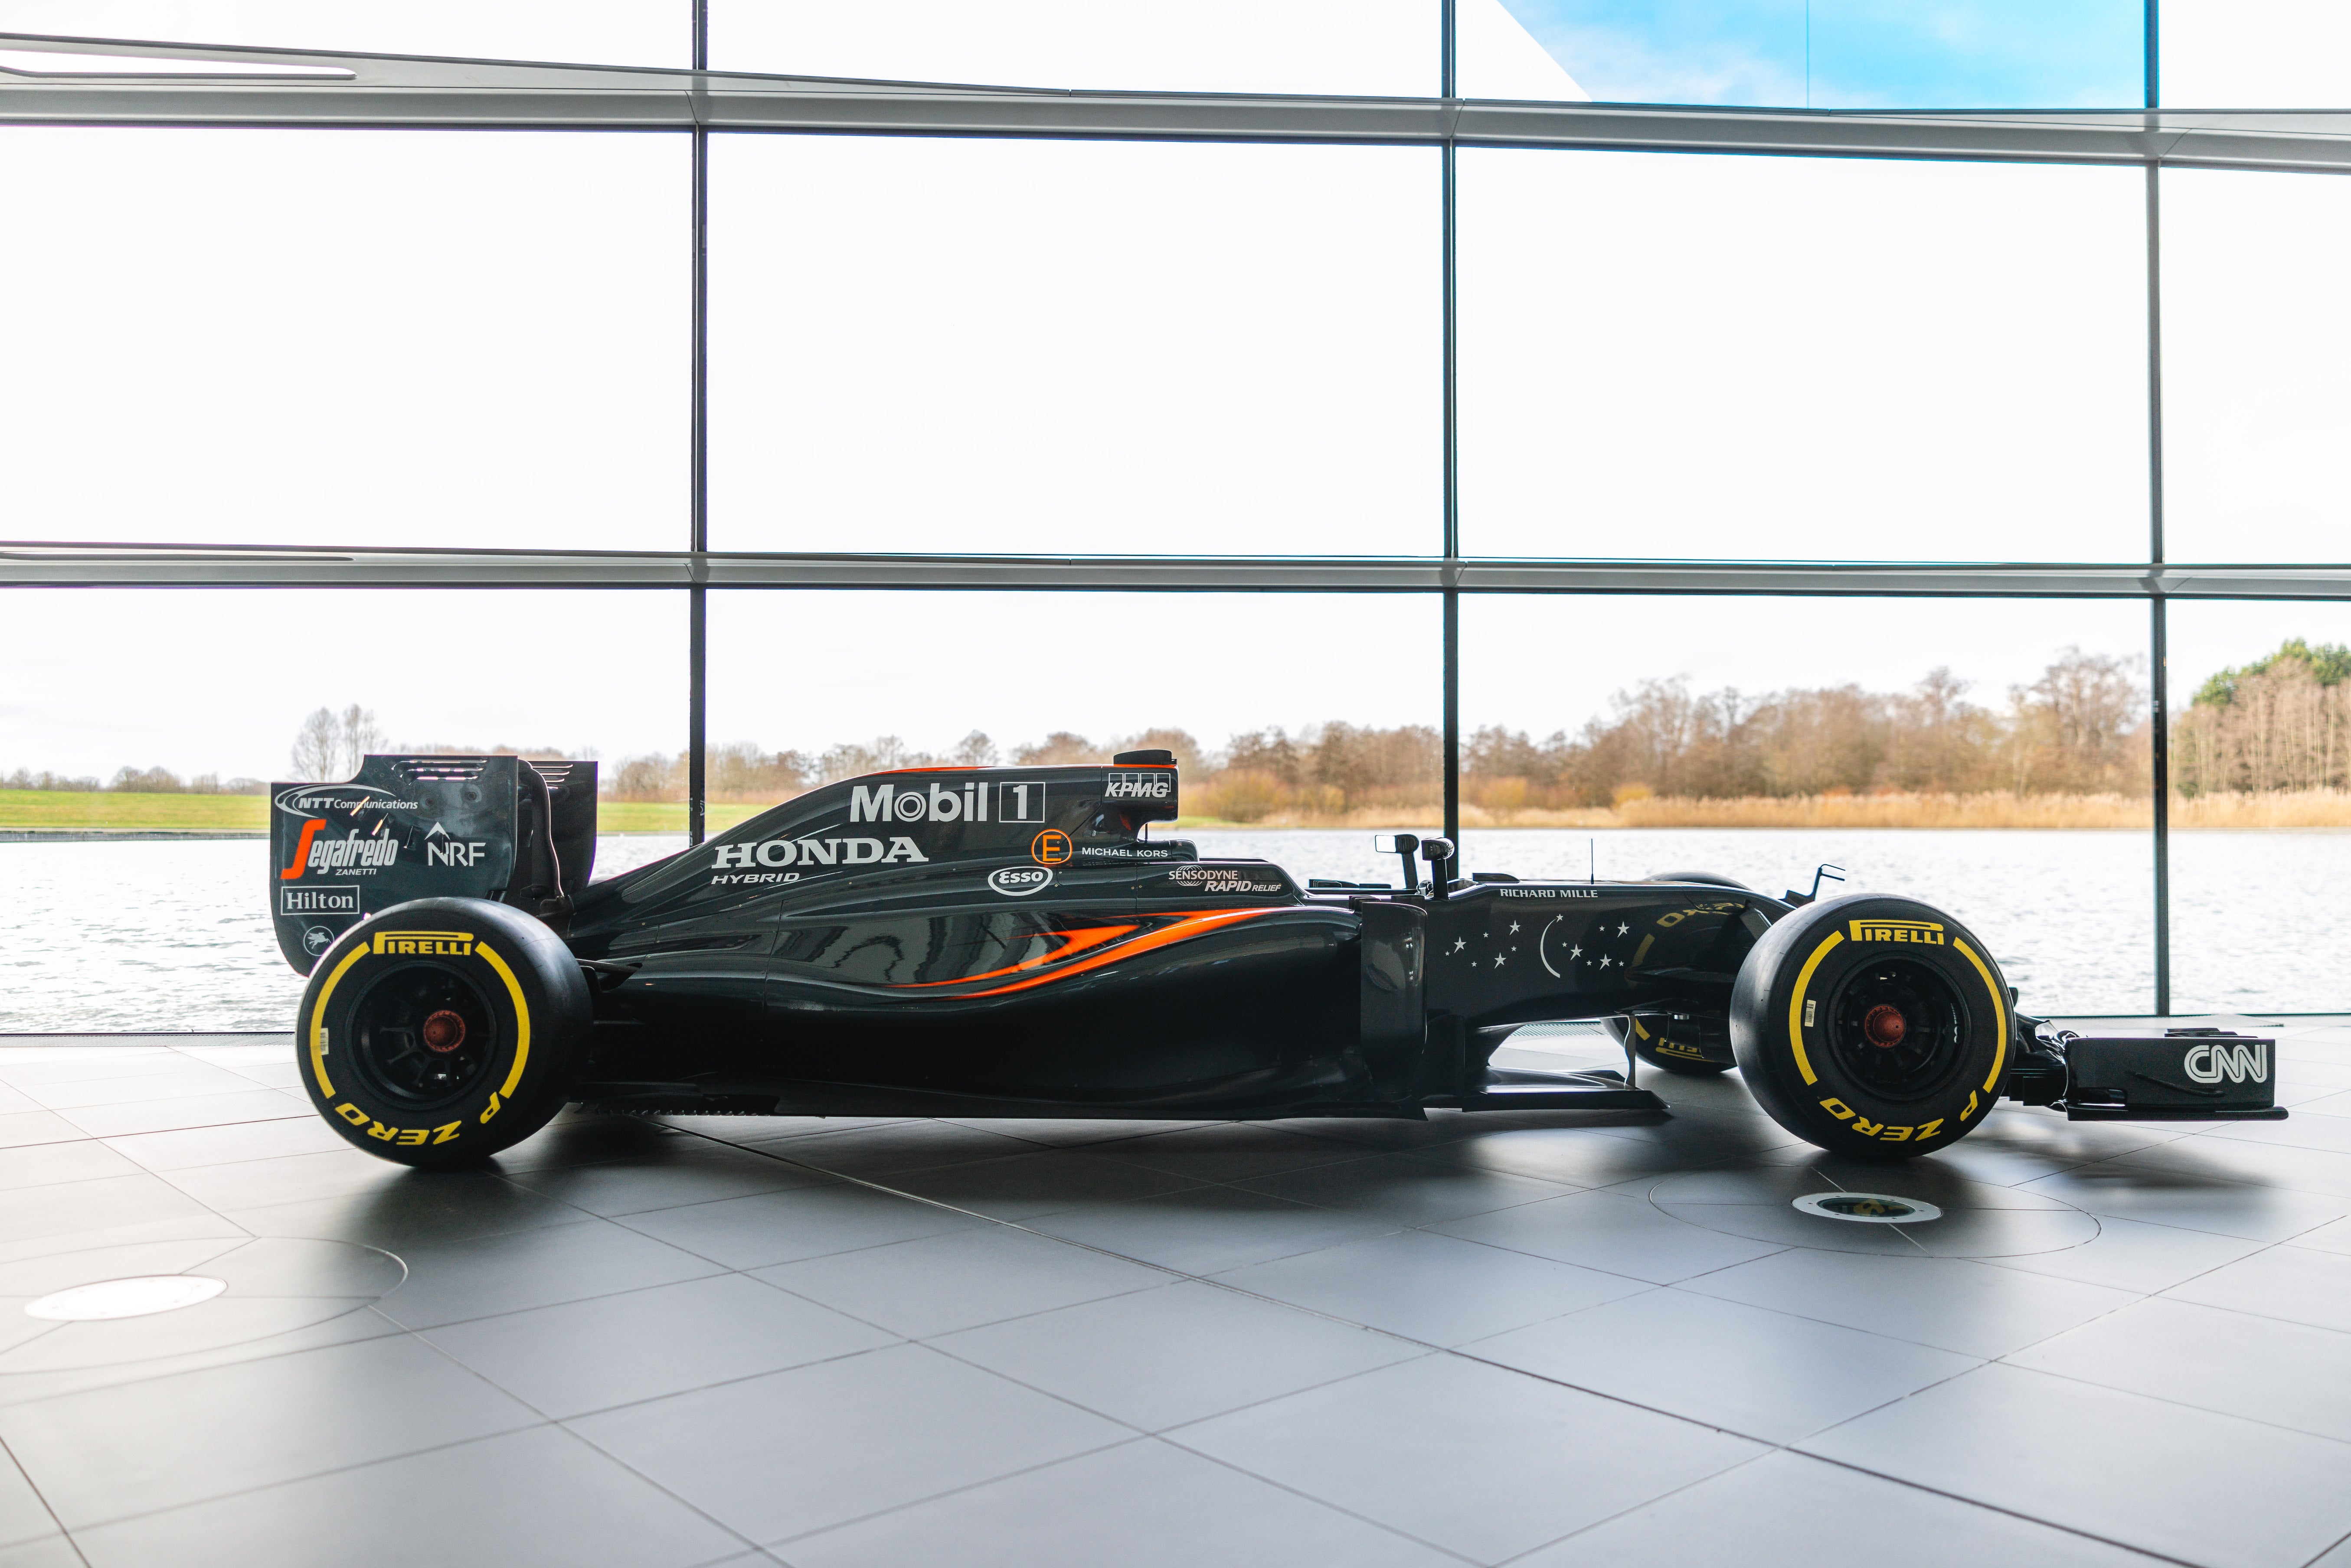 2016 Jenson Button Original McLaren MP4-31 F1 Showcar